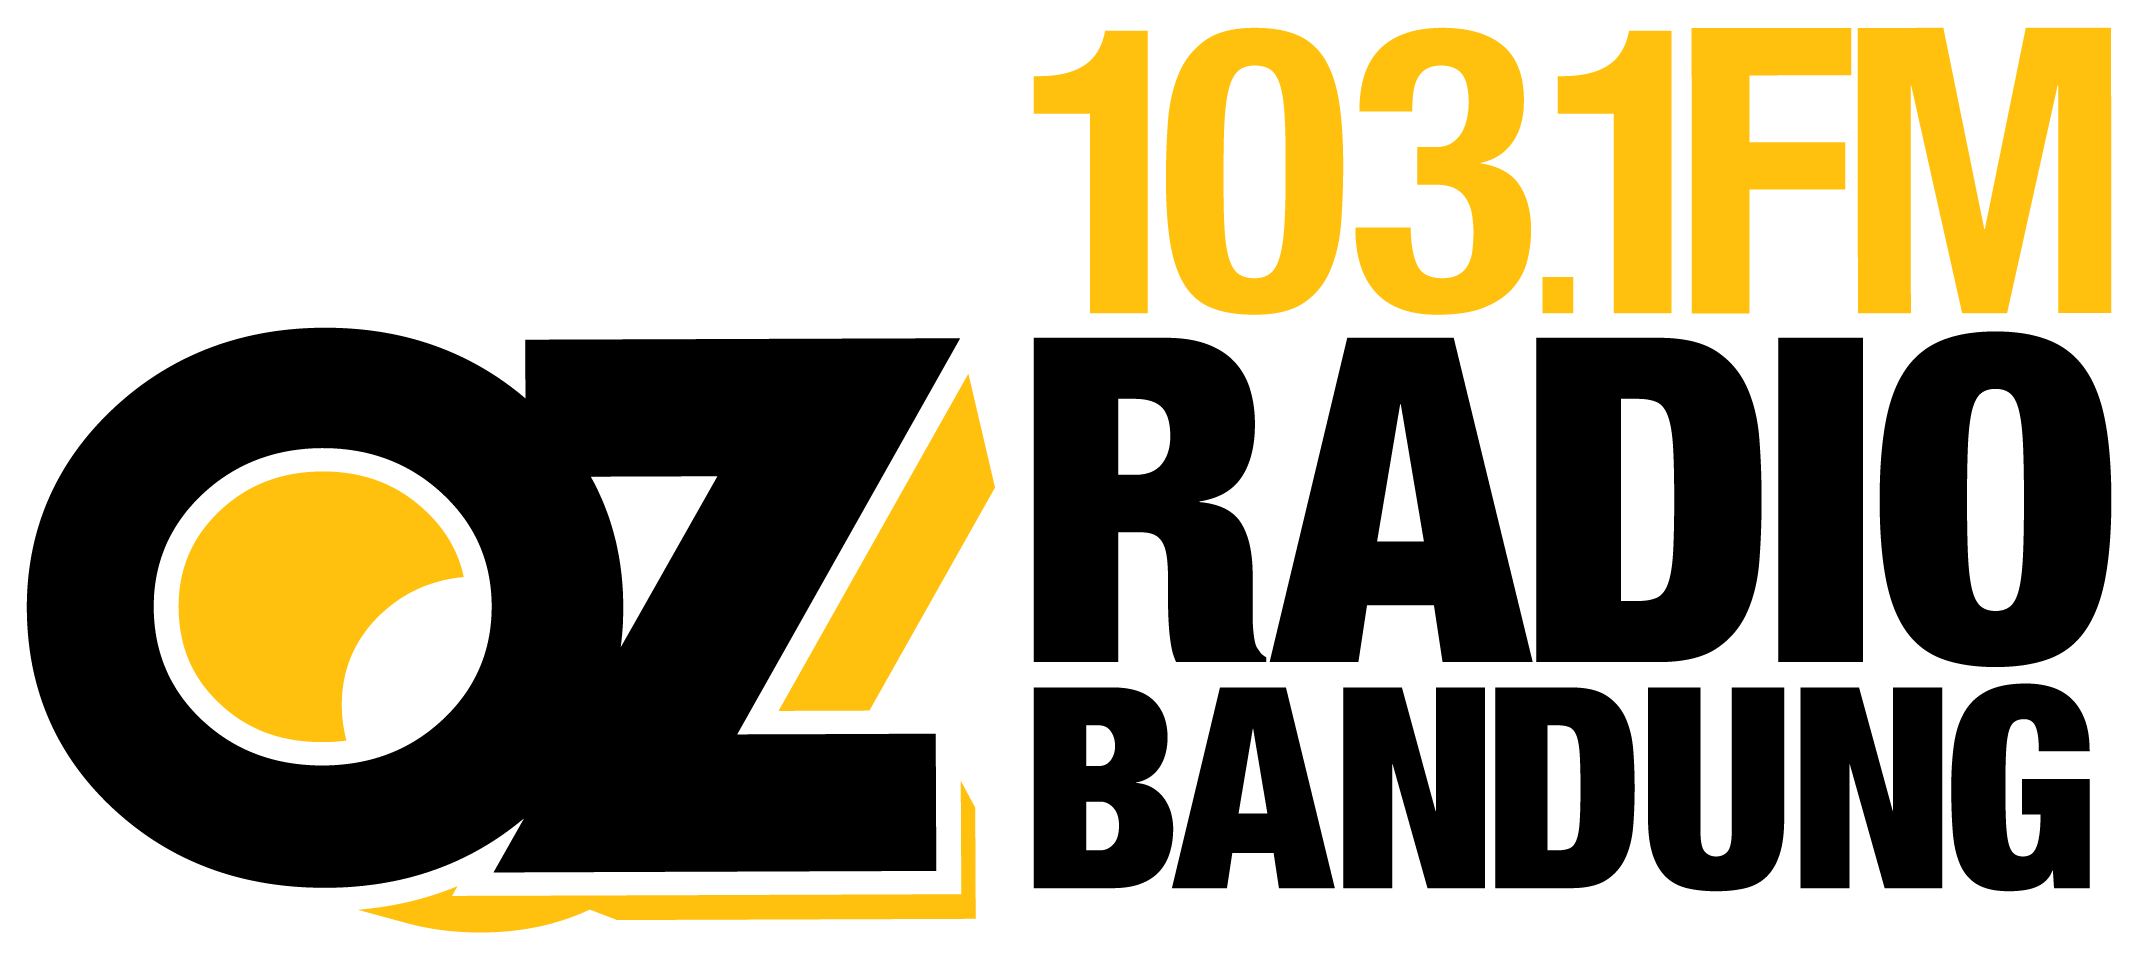 Oz Radio Bandung - Oz Radio Jakarta Logo Clipart (2362x2362), Png Download